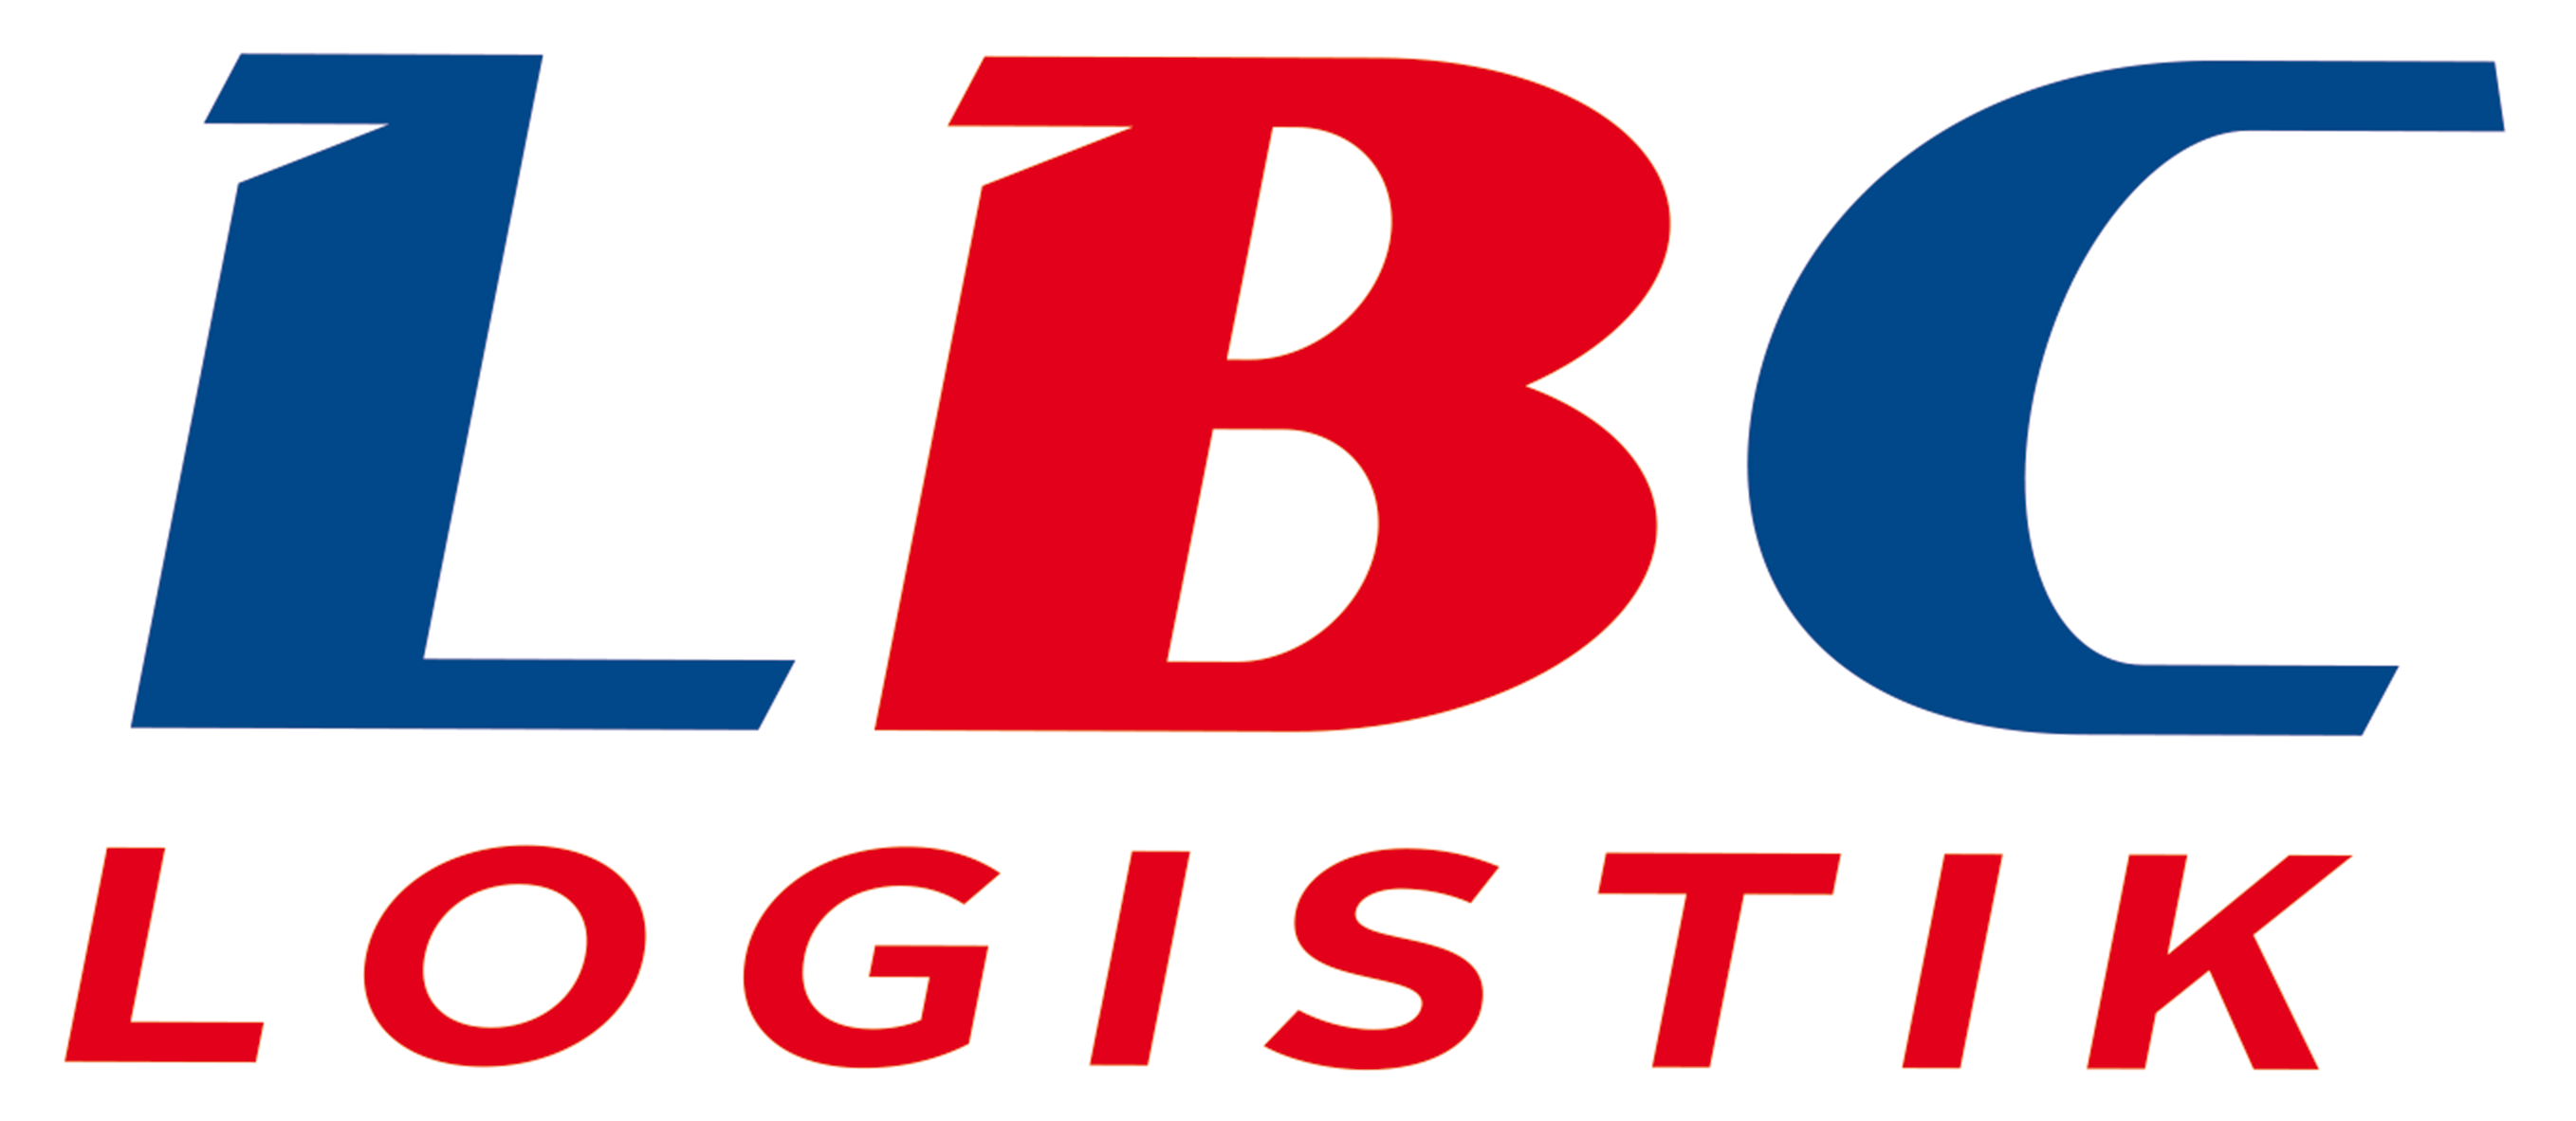 LBC Logistik